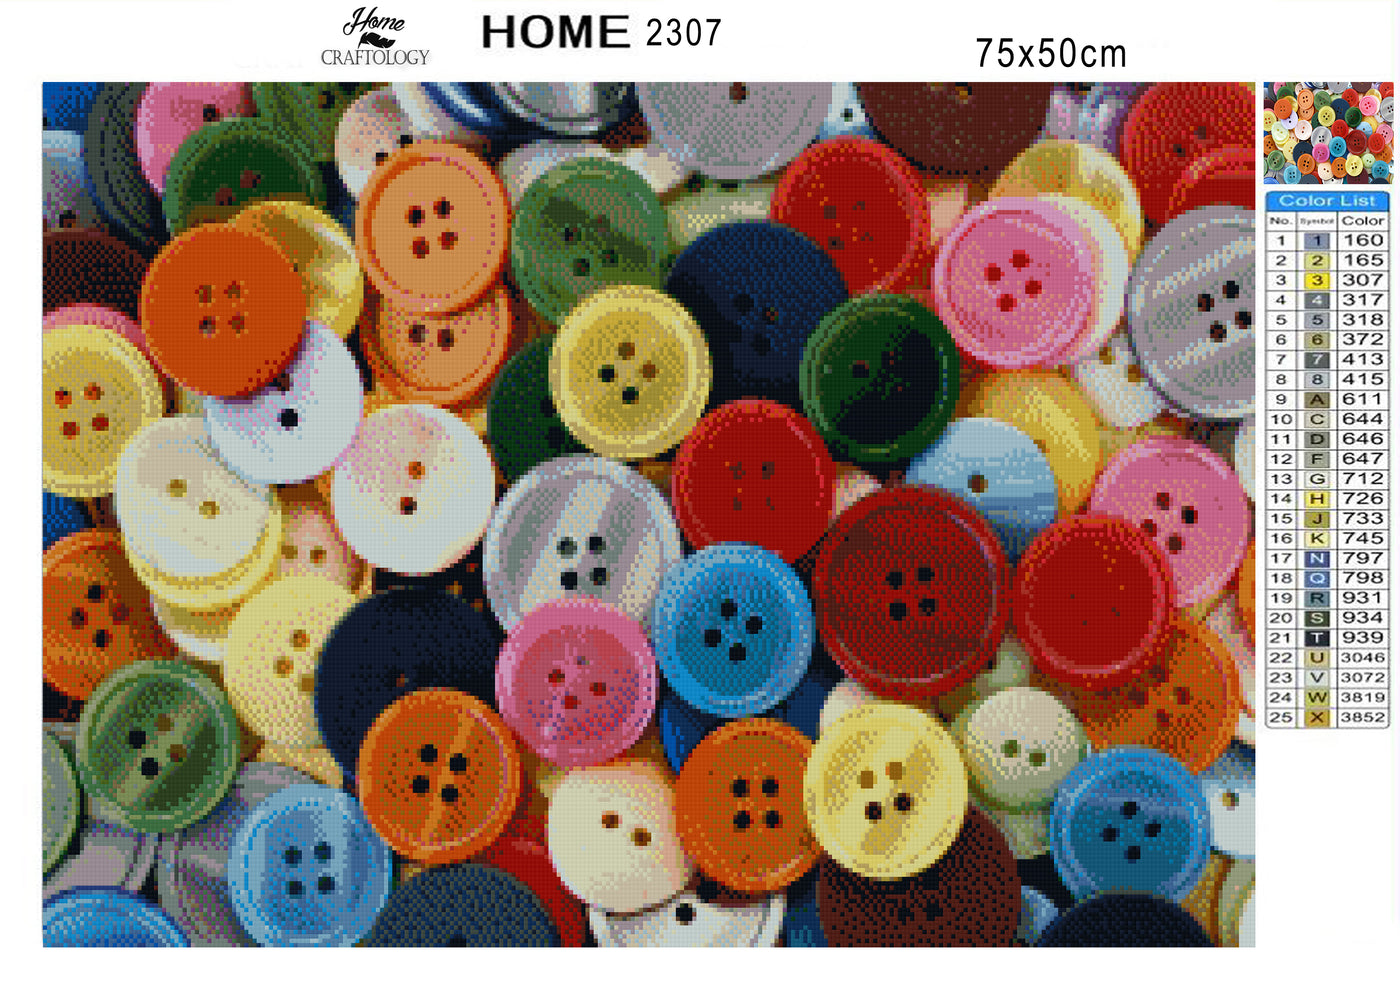 Colorful Buttons - Premium Diamond Painting Kit